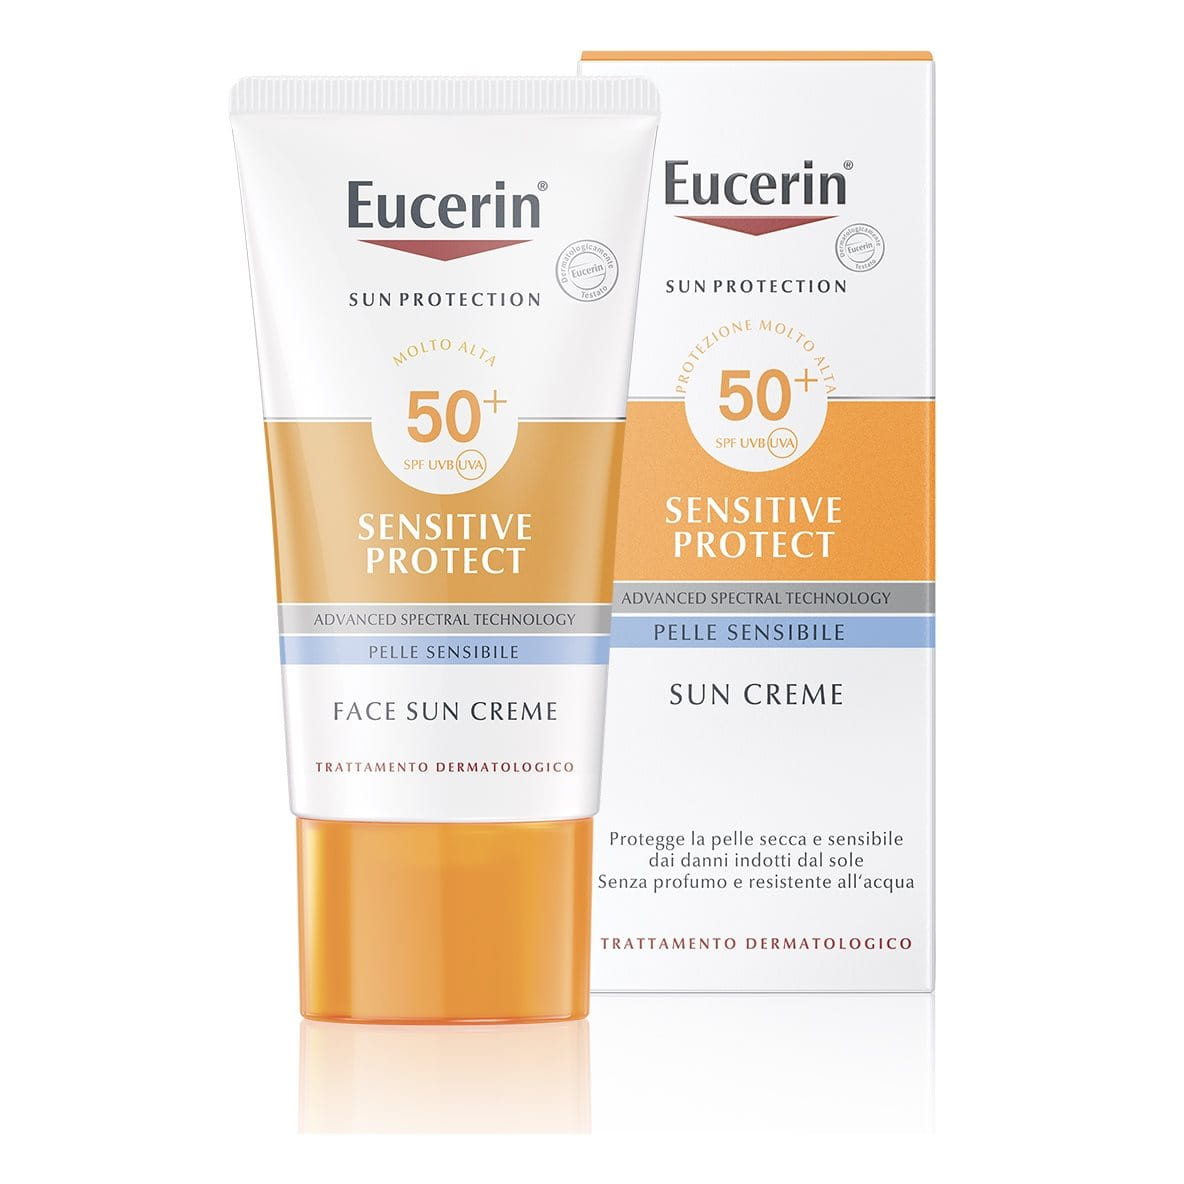 Eucerin Sensitive Protect Sun Creme SPF 50+

